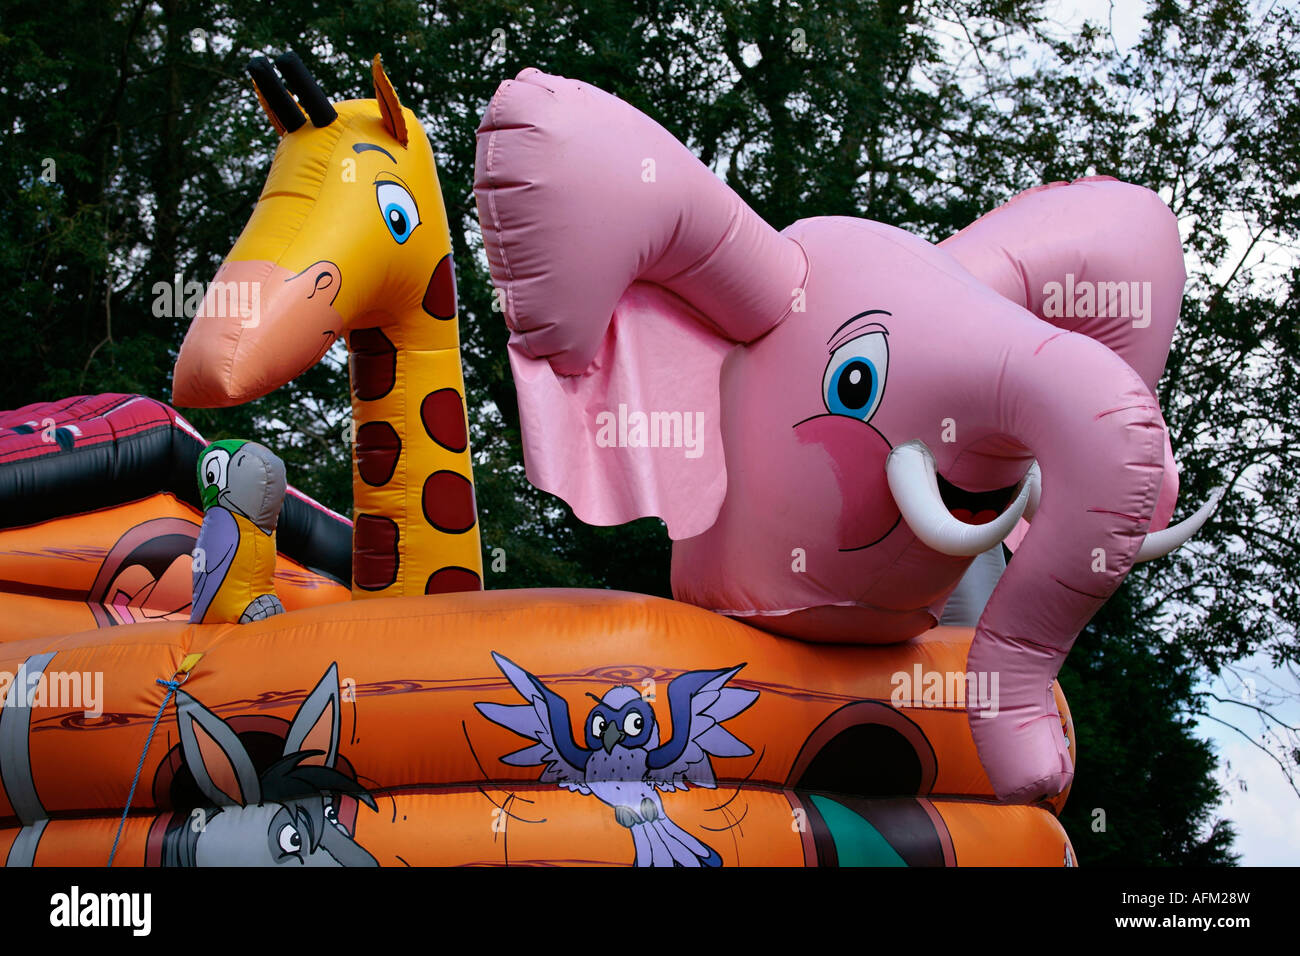 Noah's Ark bouncy castle with inflatable giraffe and elephant Stock Photo